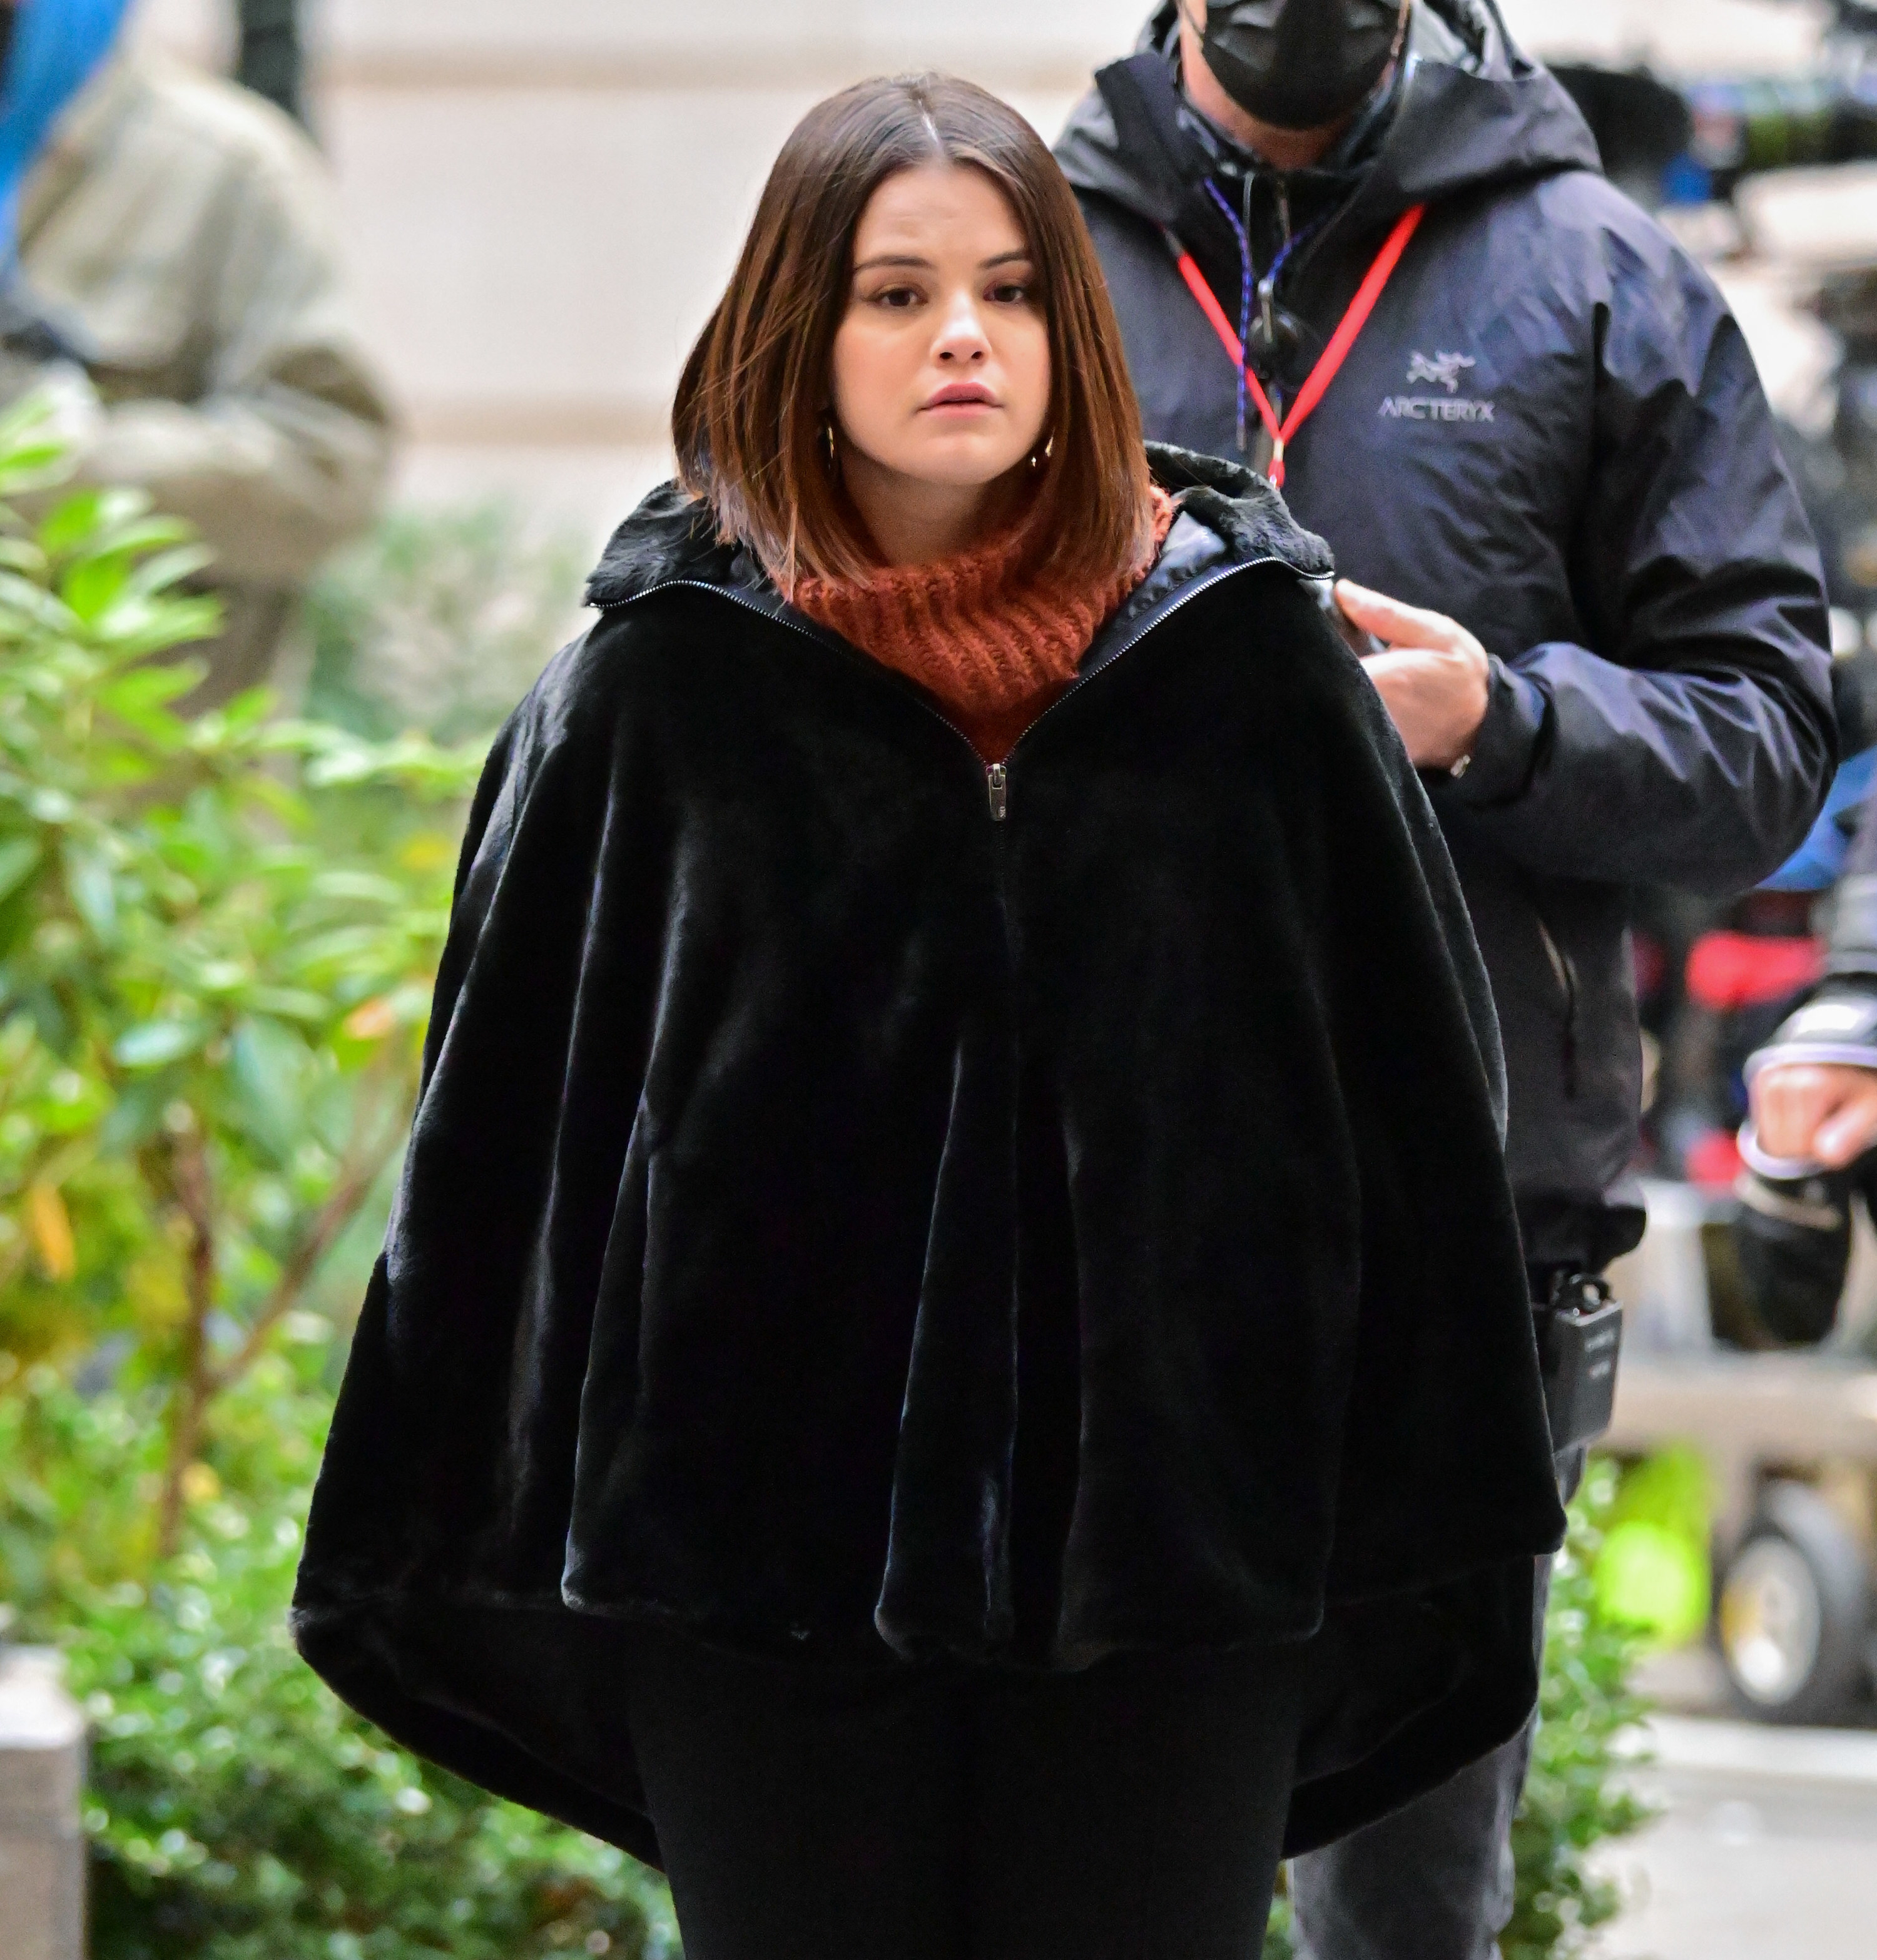 Selena looks ahead while wearing a coat